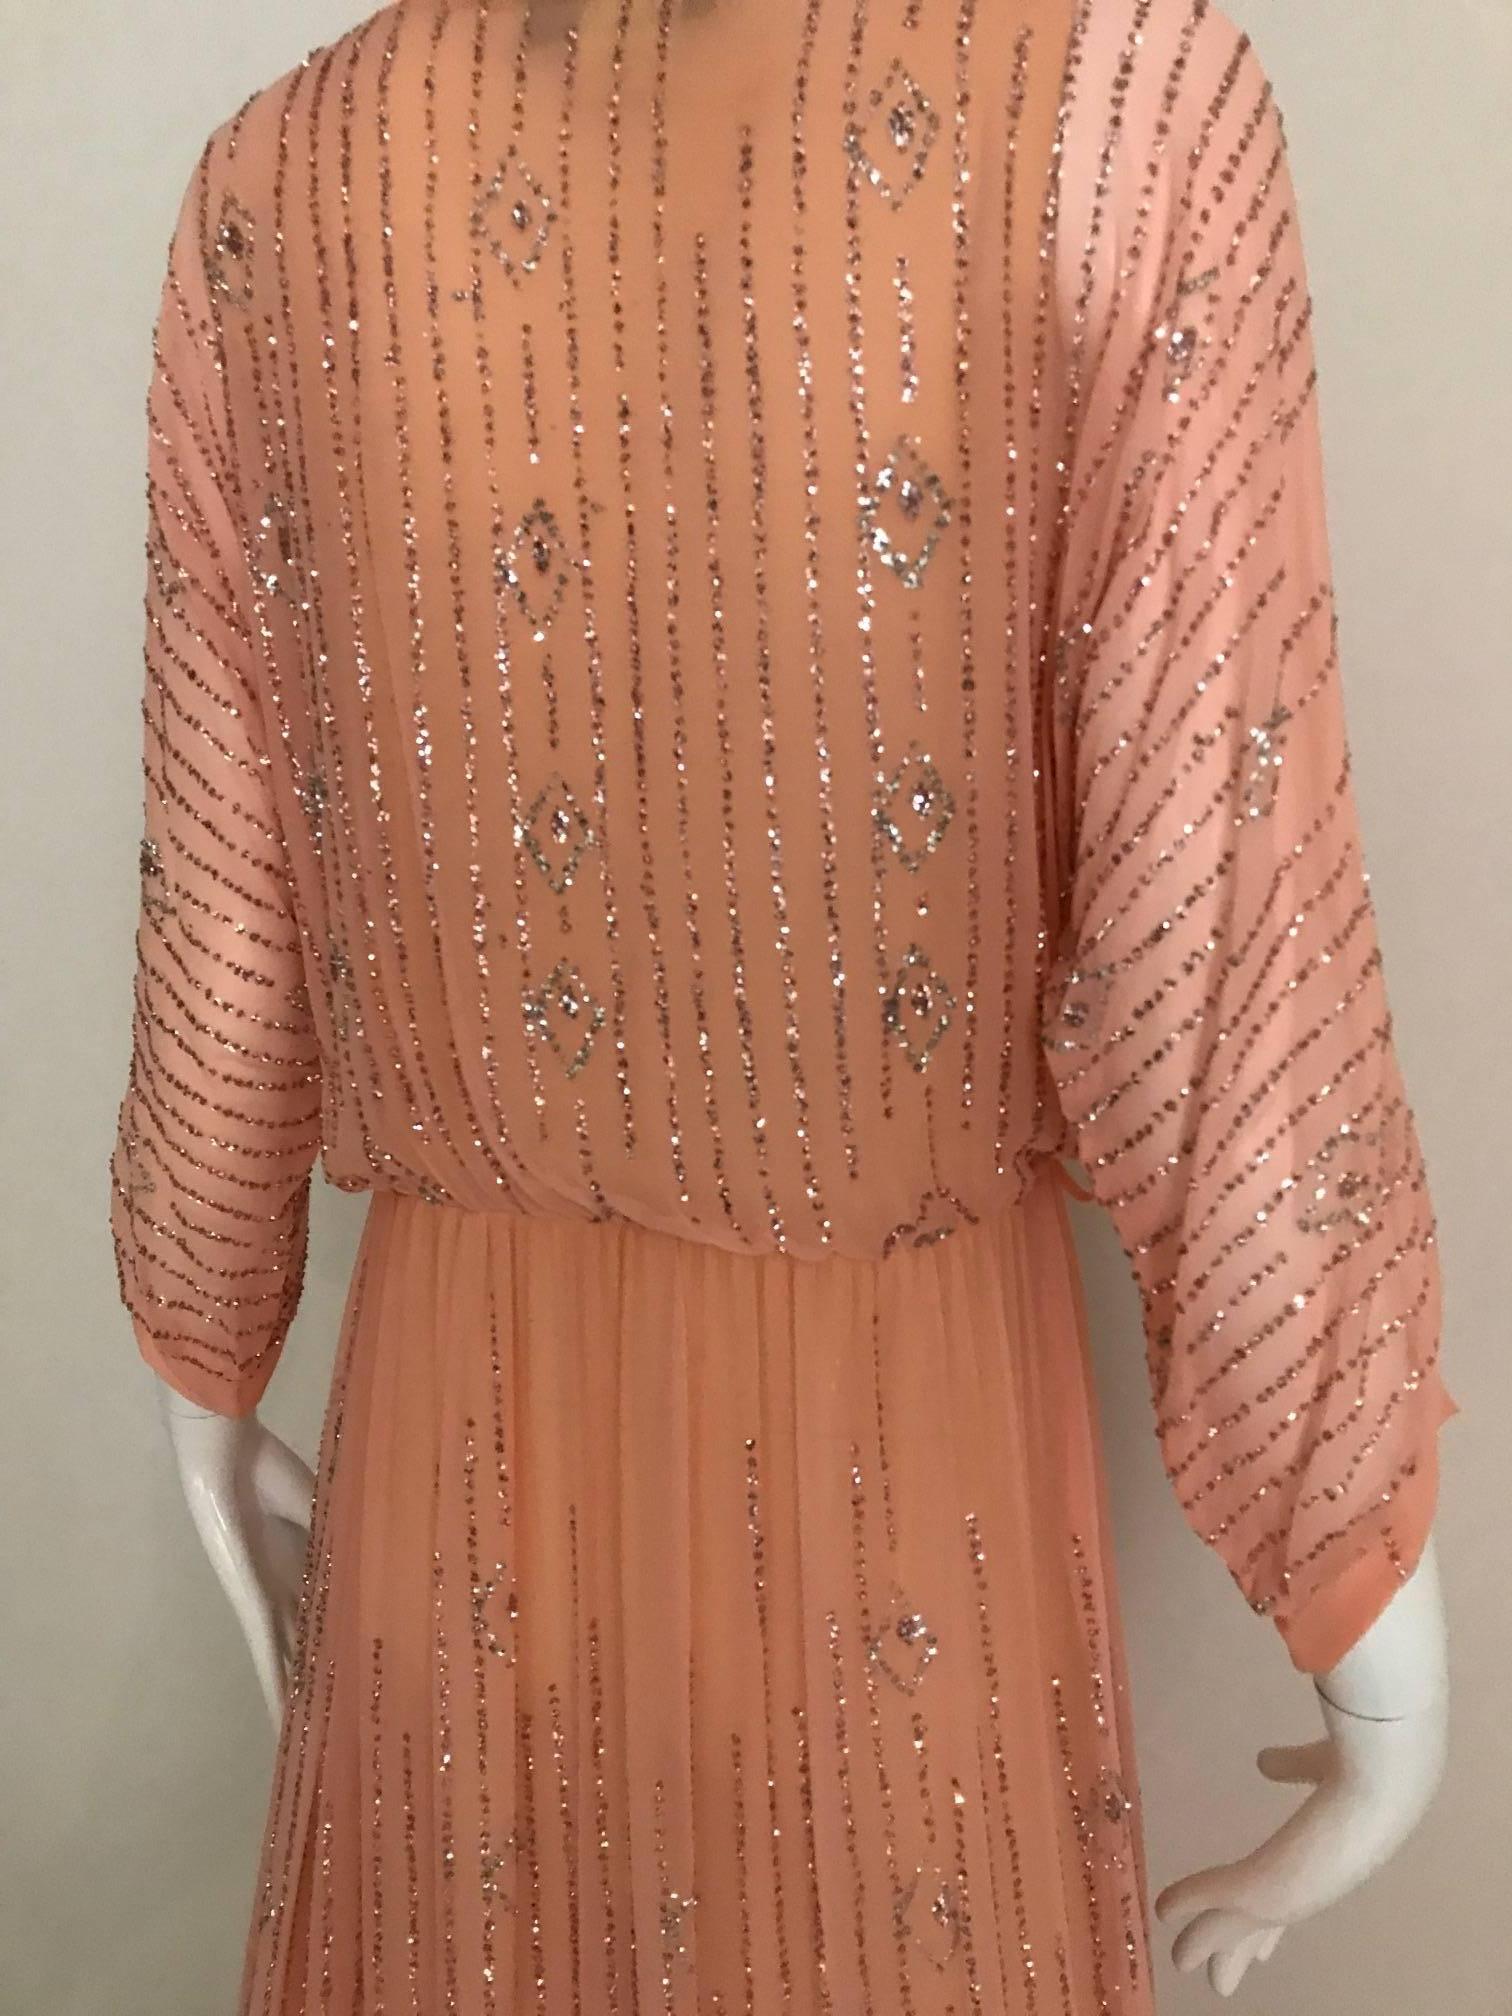 Women's 1970s Saks Fifth Ave peach dress with metallic glitter sequins maxi dress